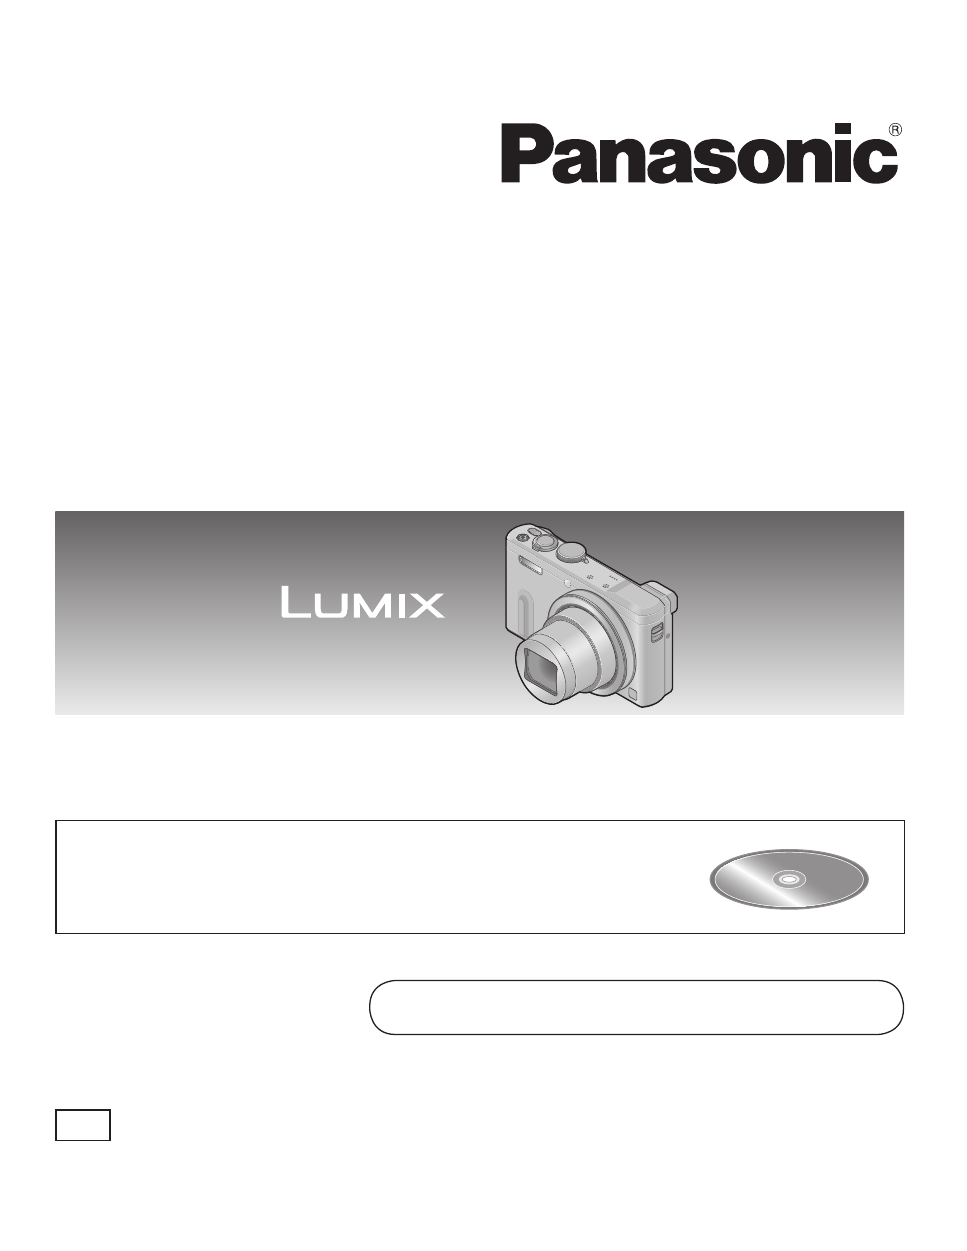 Panasonic Tz60 Manual Download